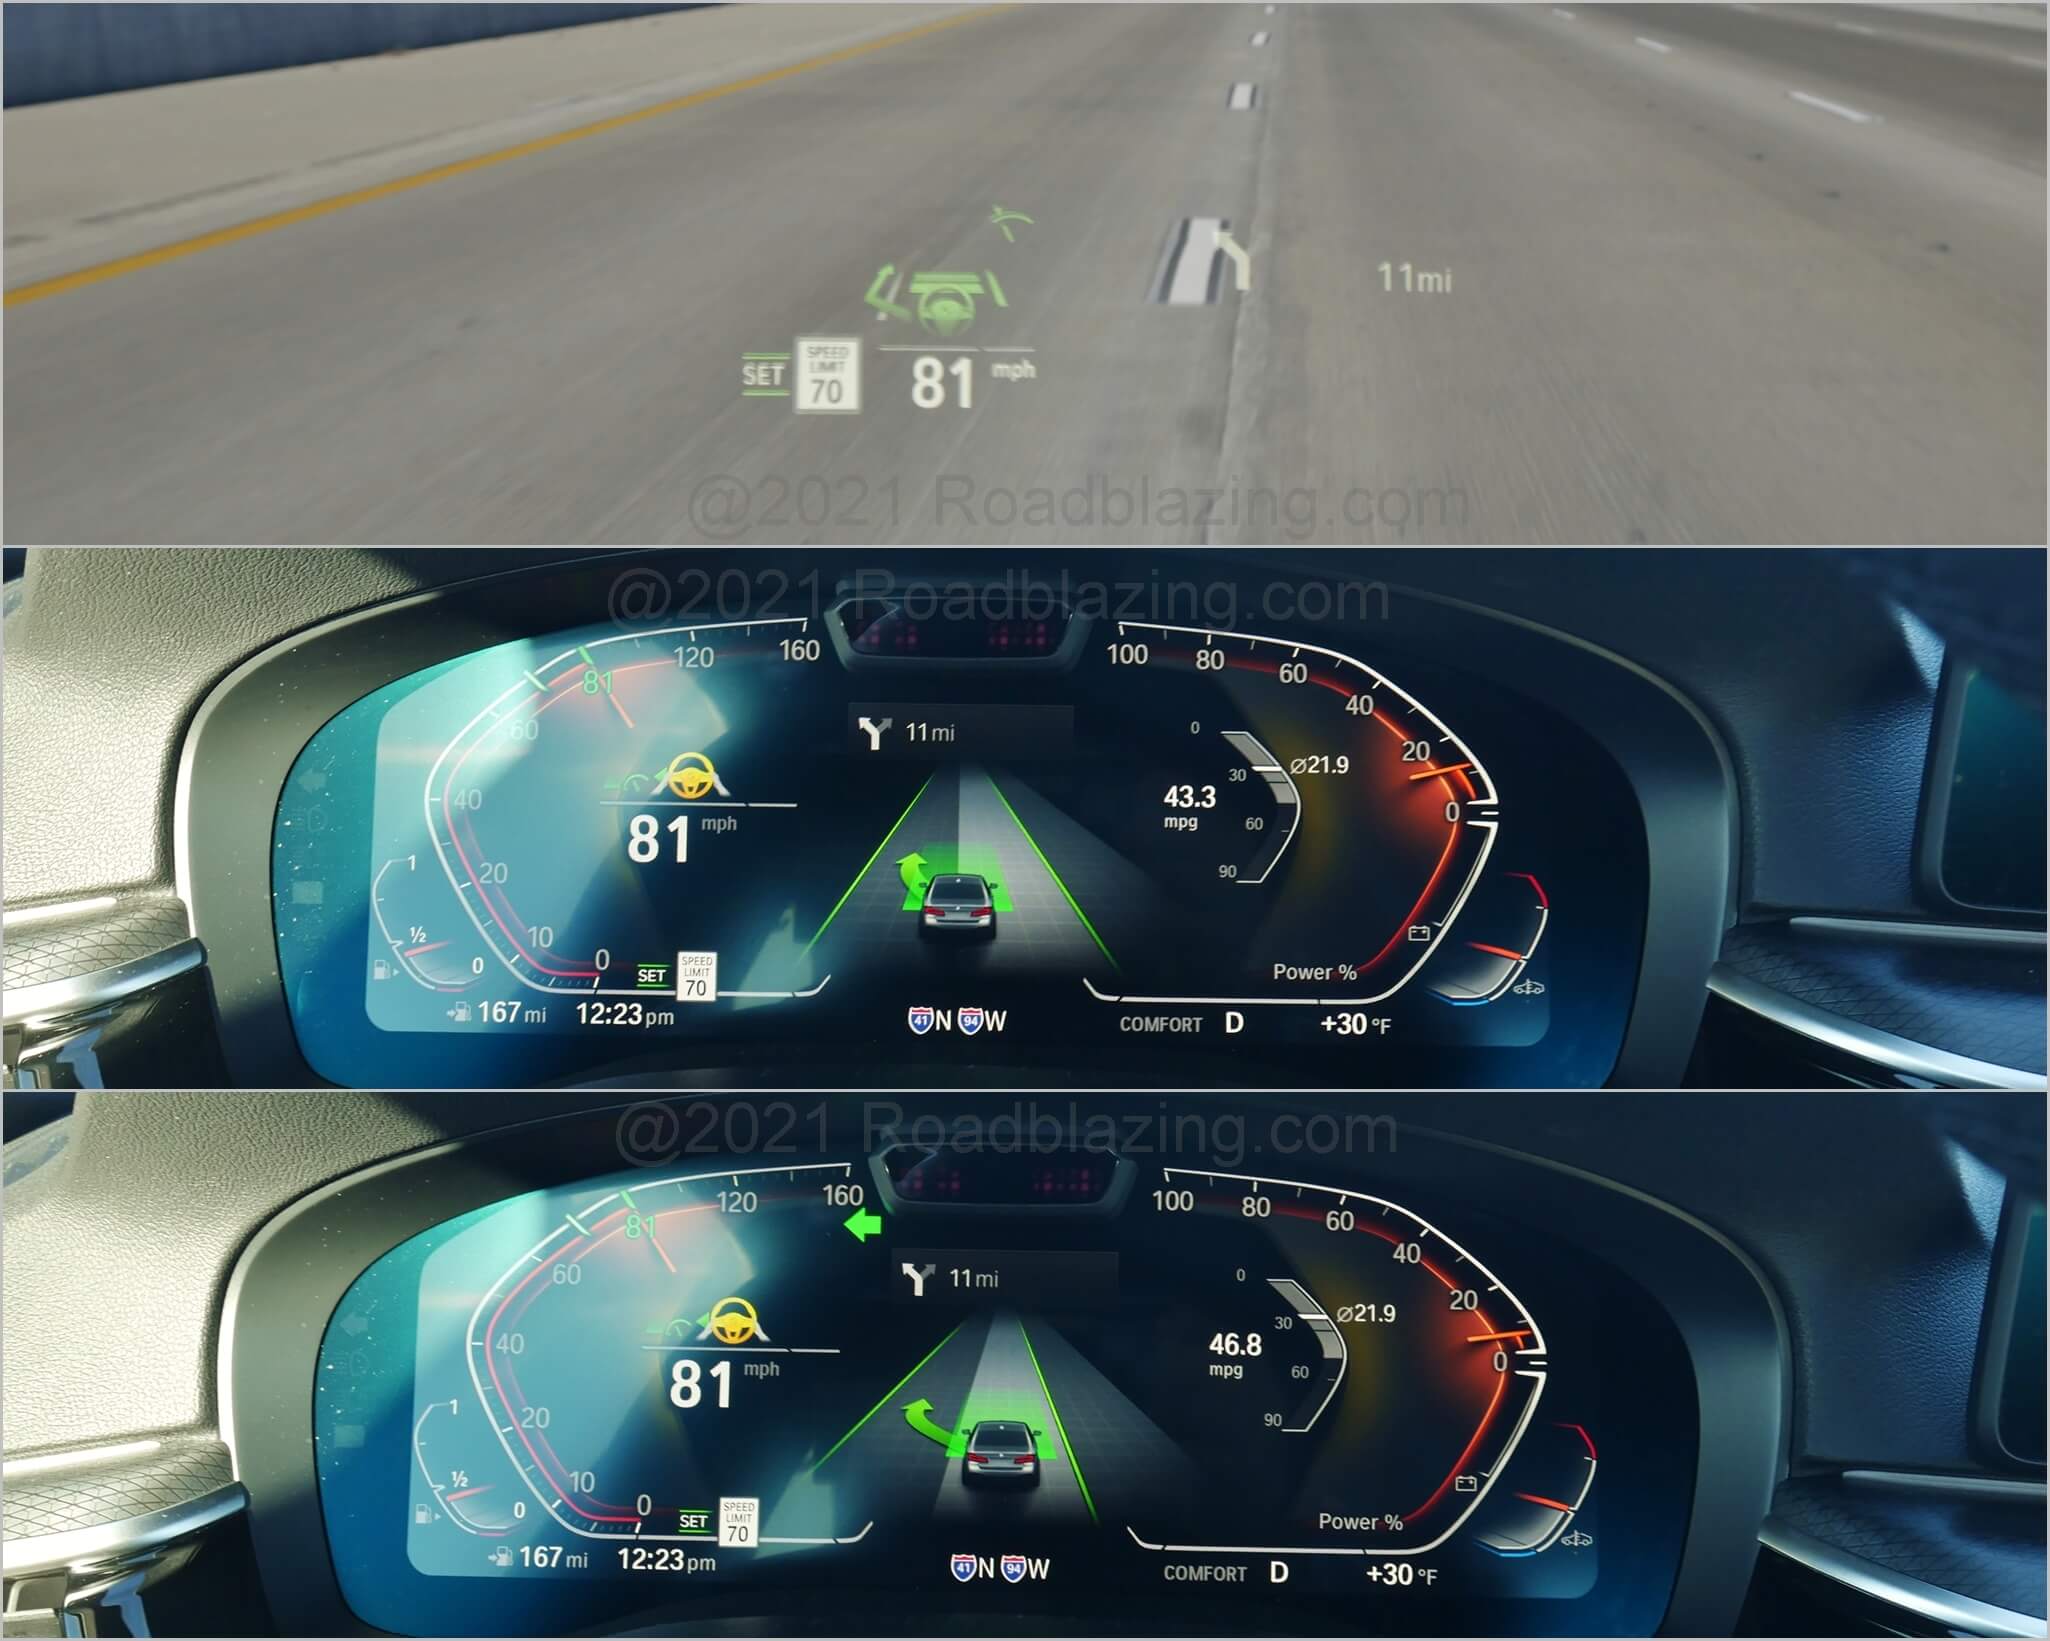 2021 BMW 540i xDrive: autonomous lane change assist feature of adaptive cruise control